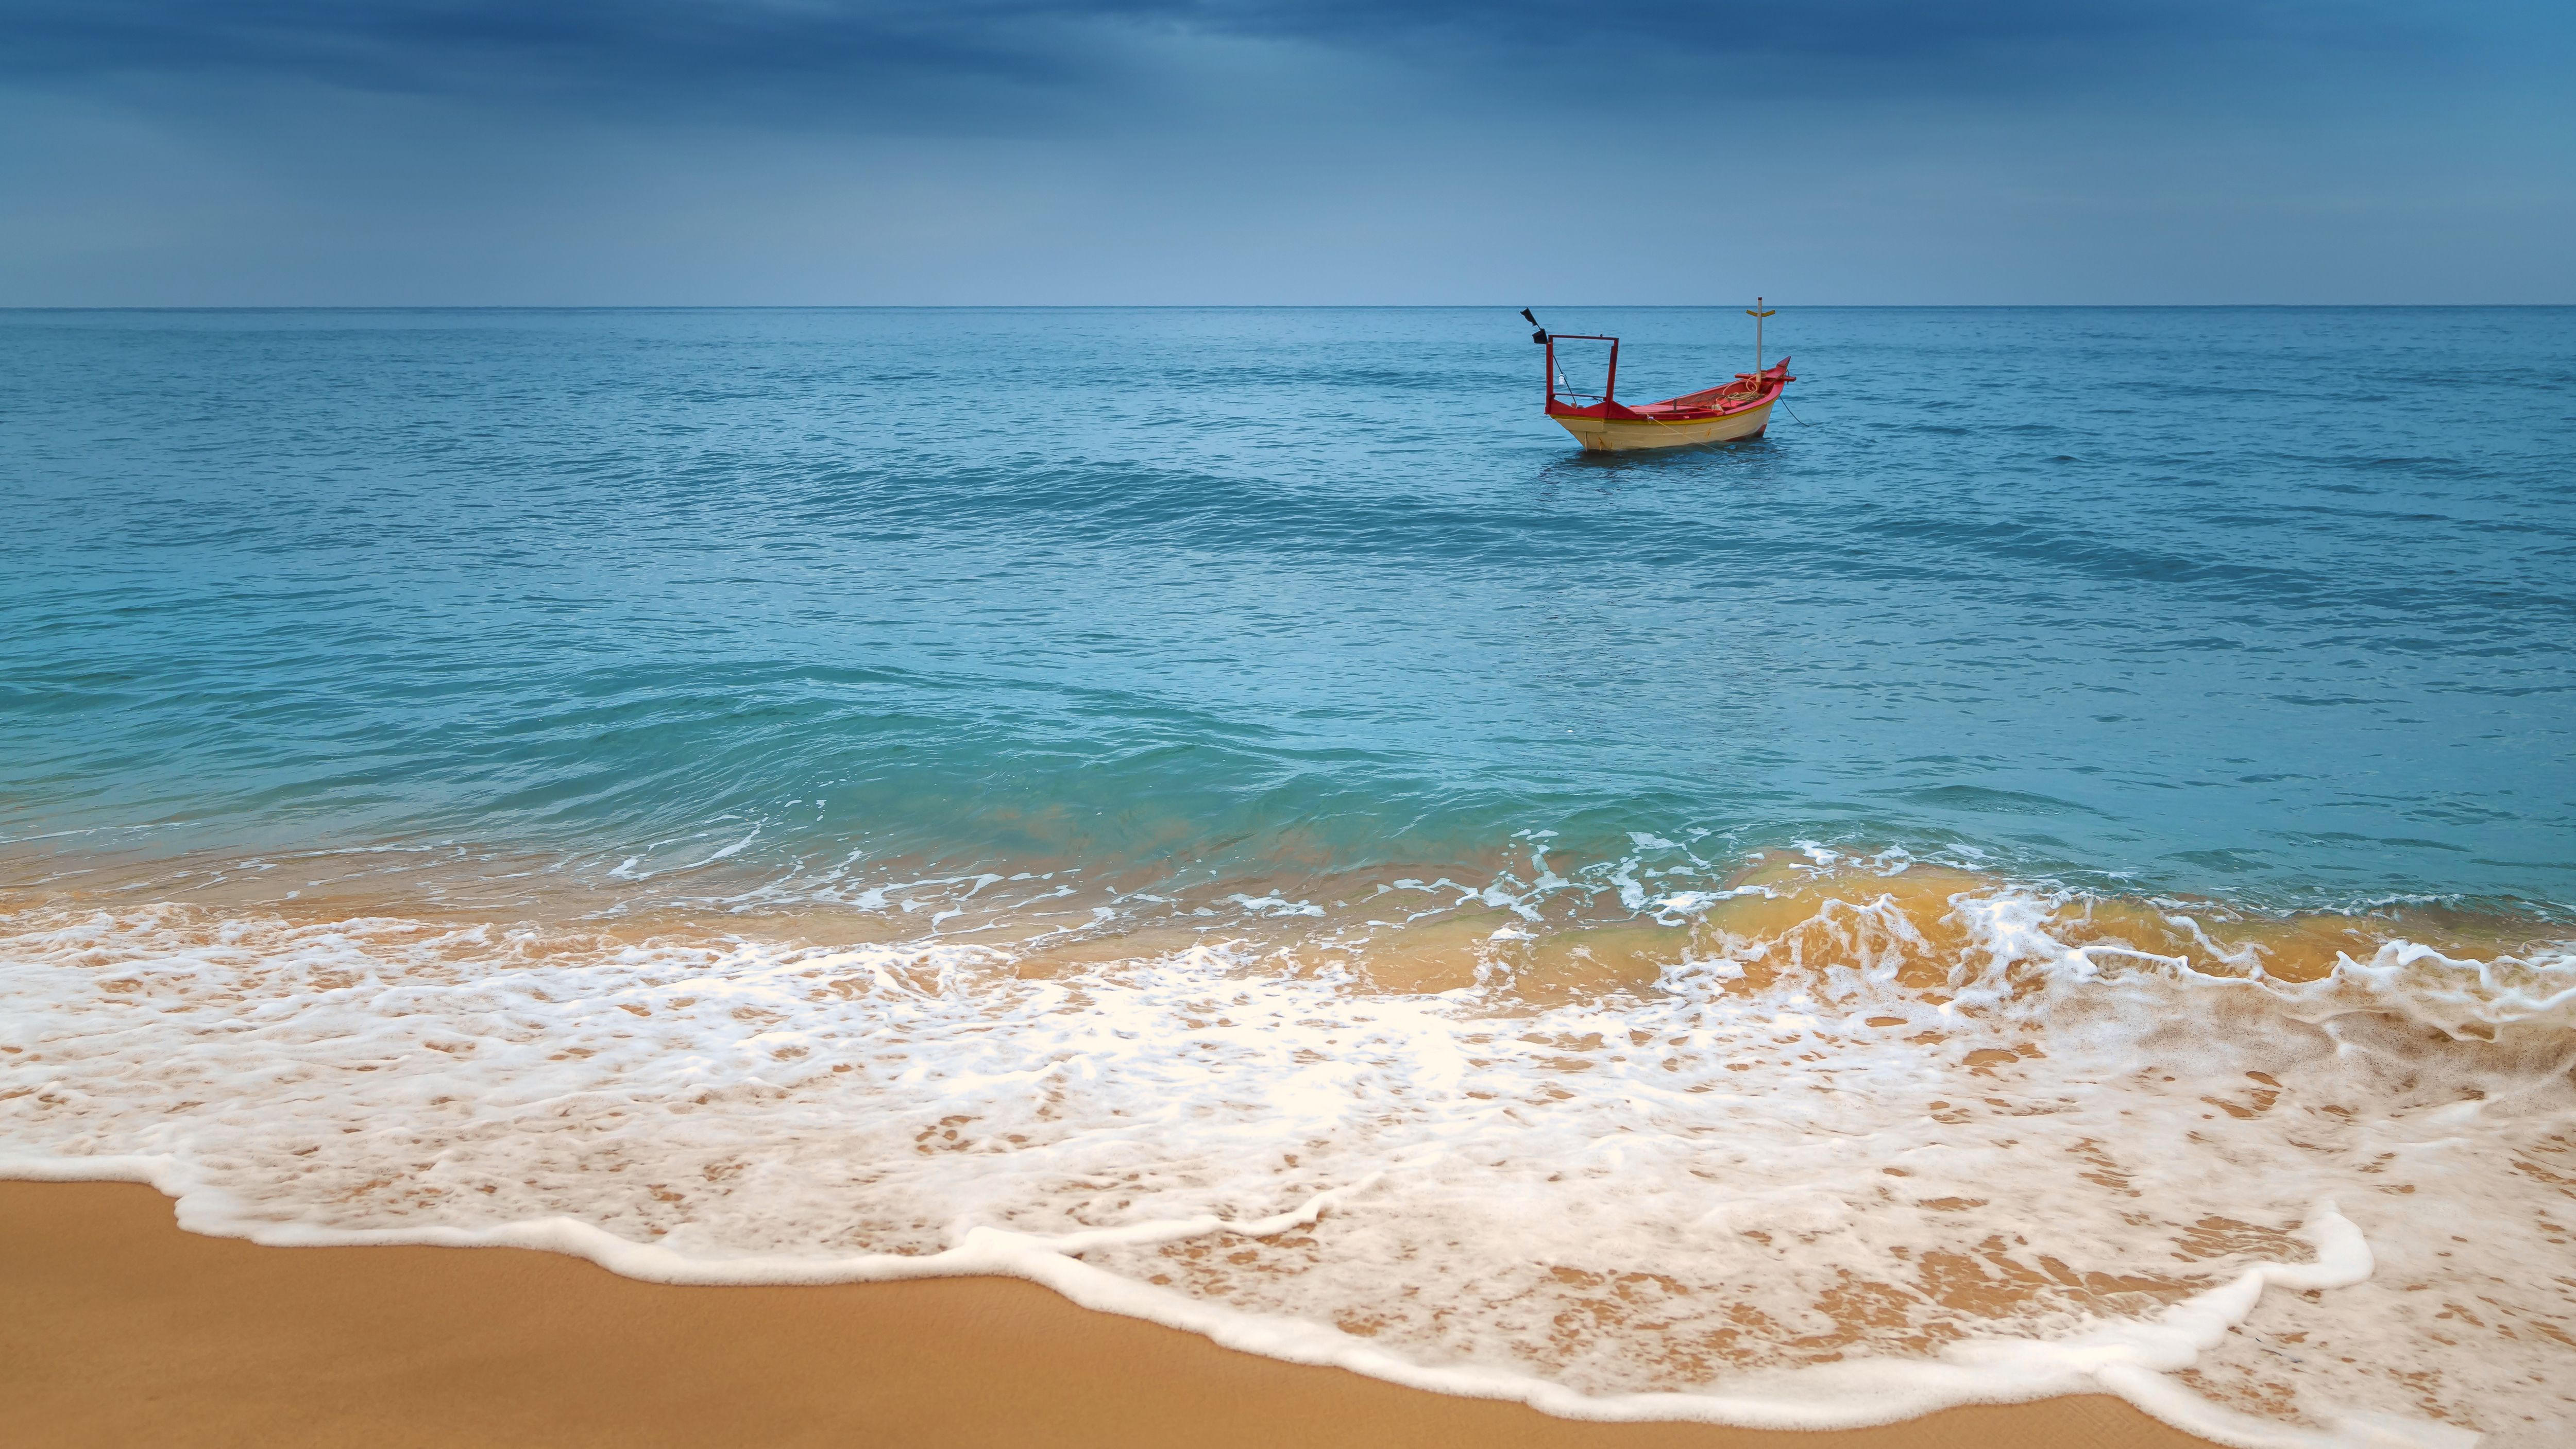 Boat on Blue Sea 4k Ultra HD Wallpaper. Background Image